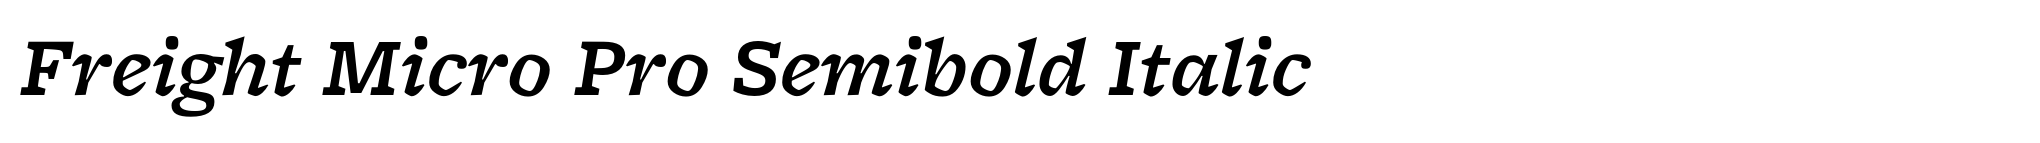 Freight Micro Pro Semibold Italic image